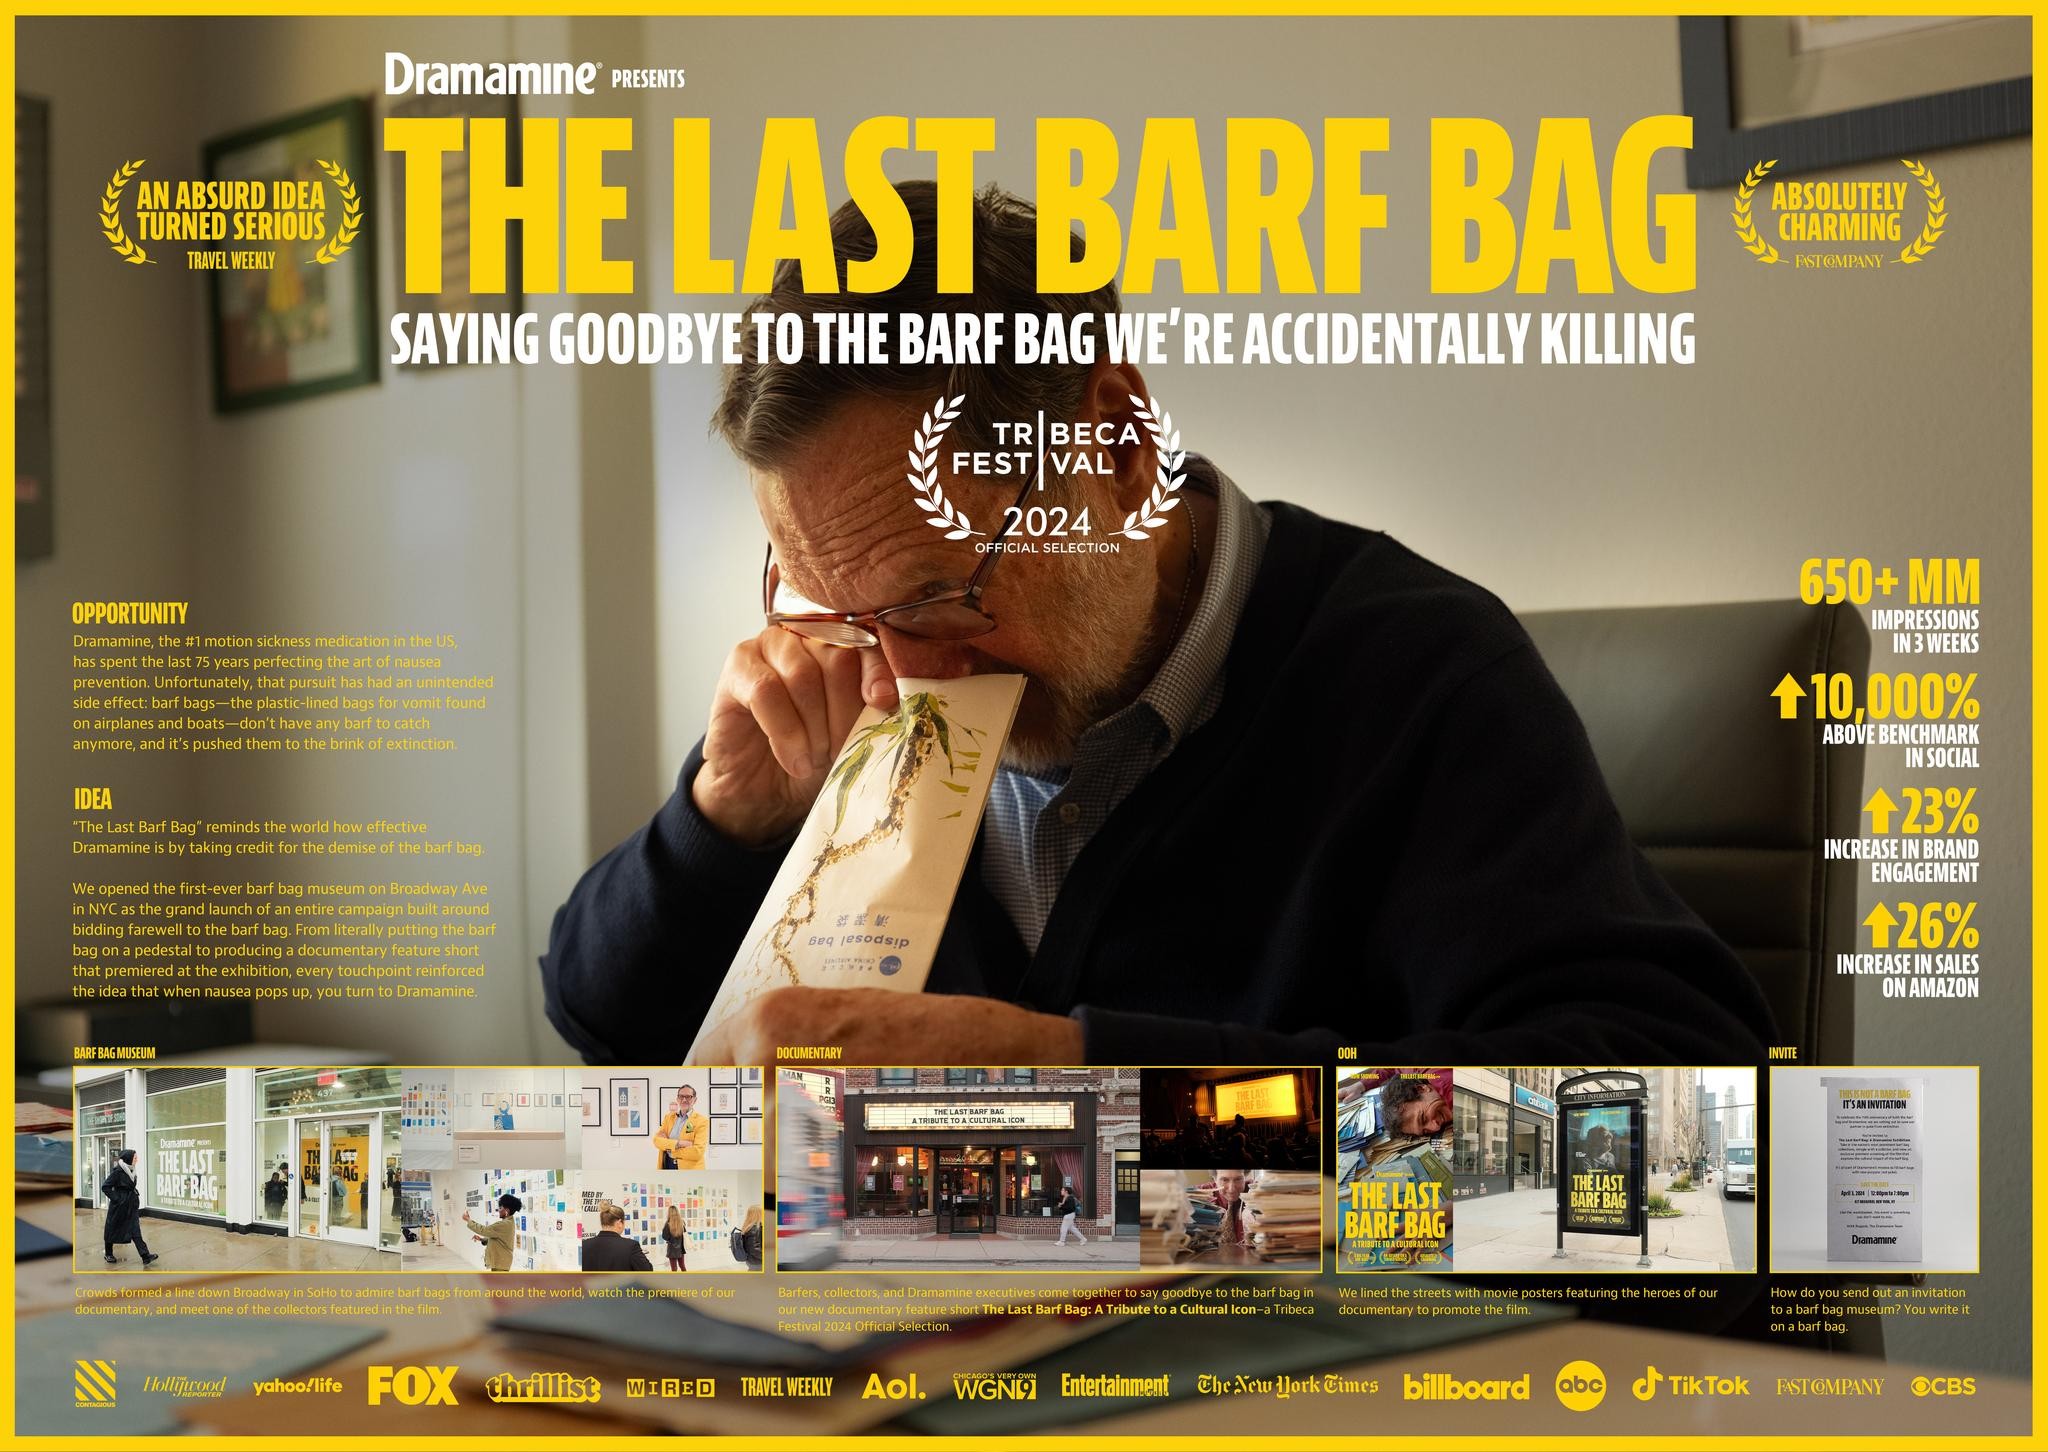 THE LAST BARF BAG